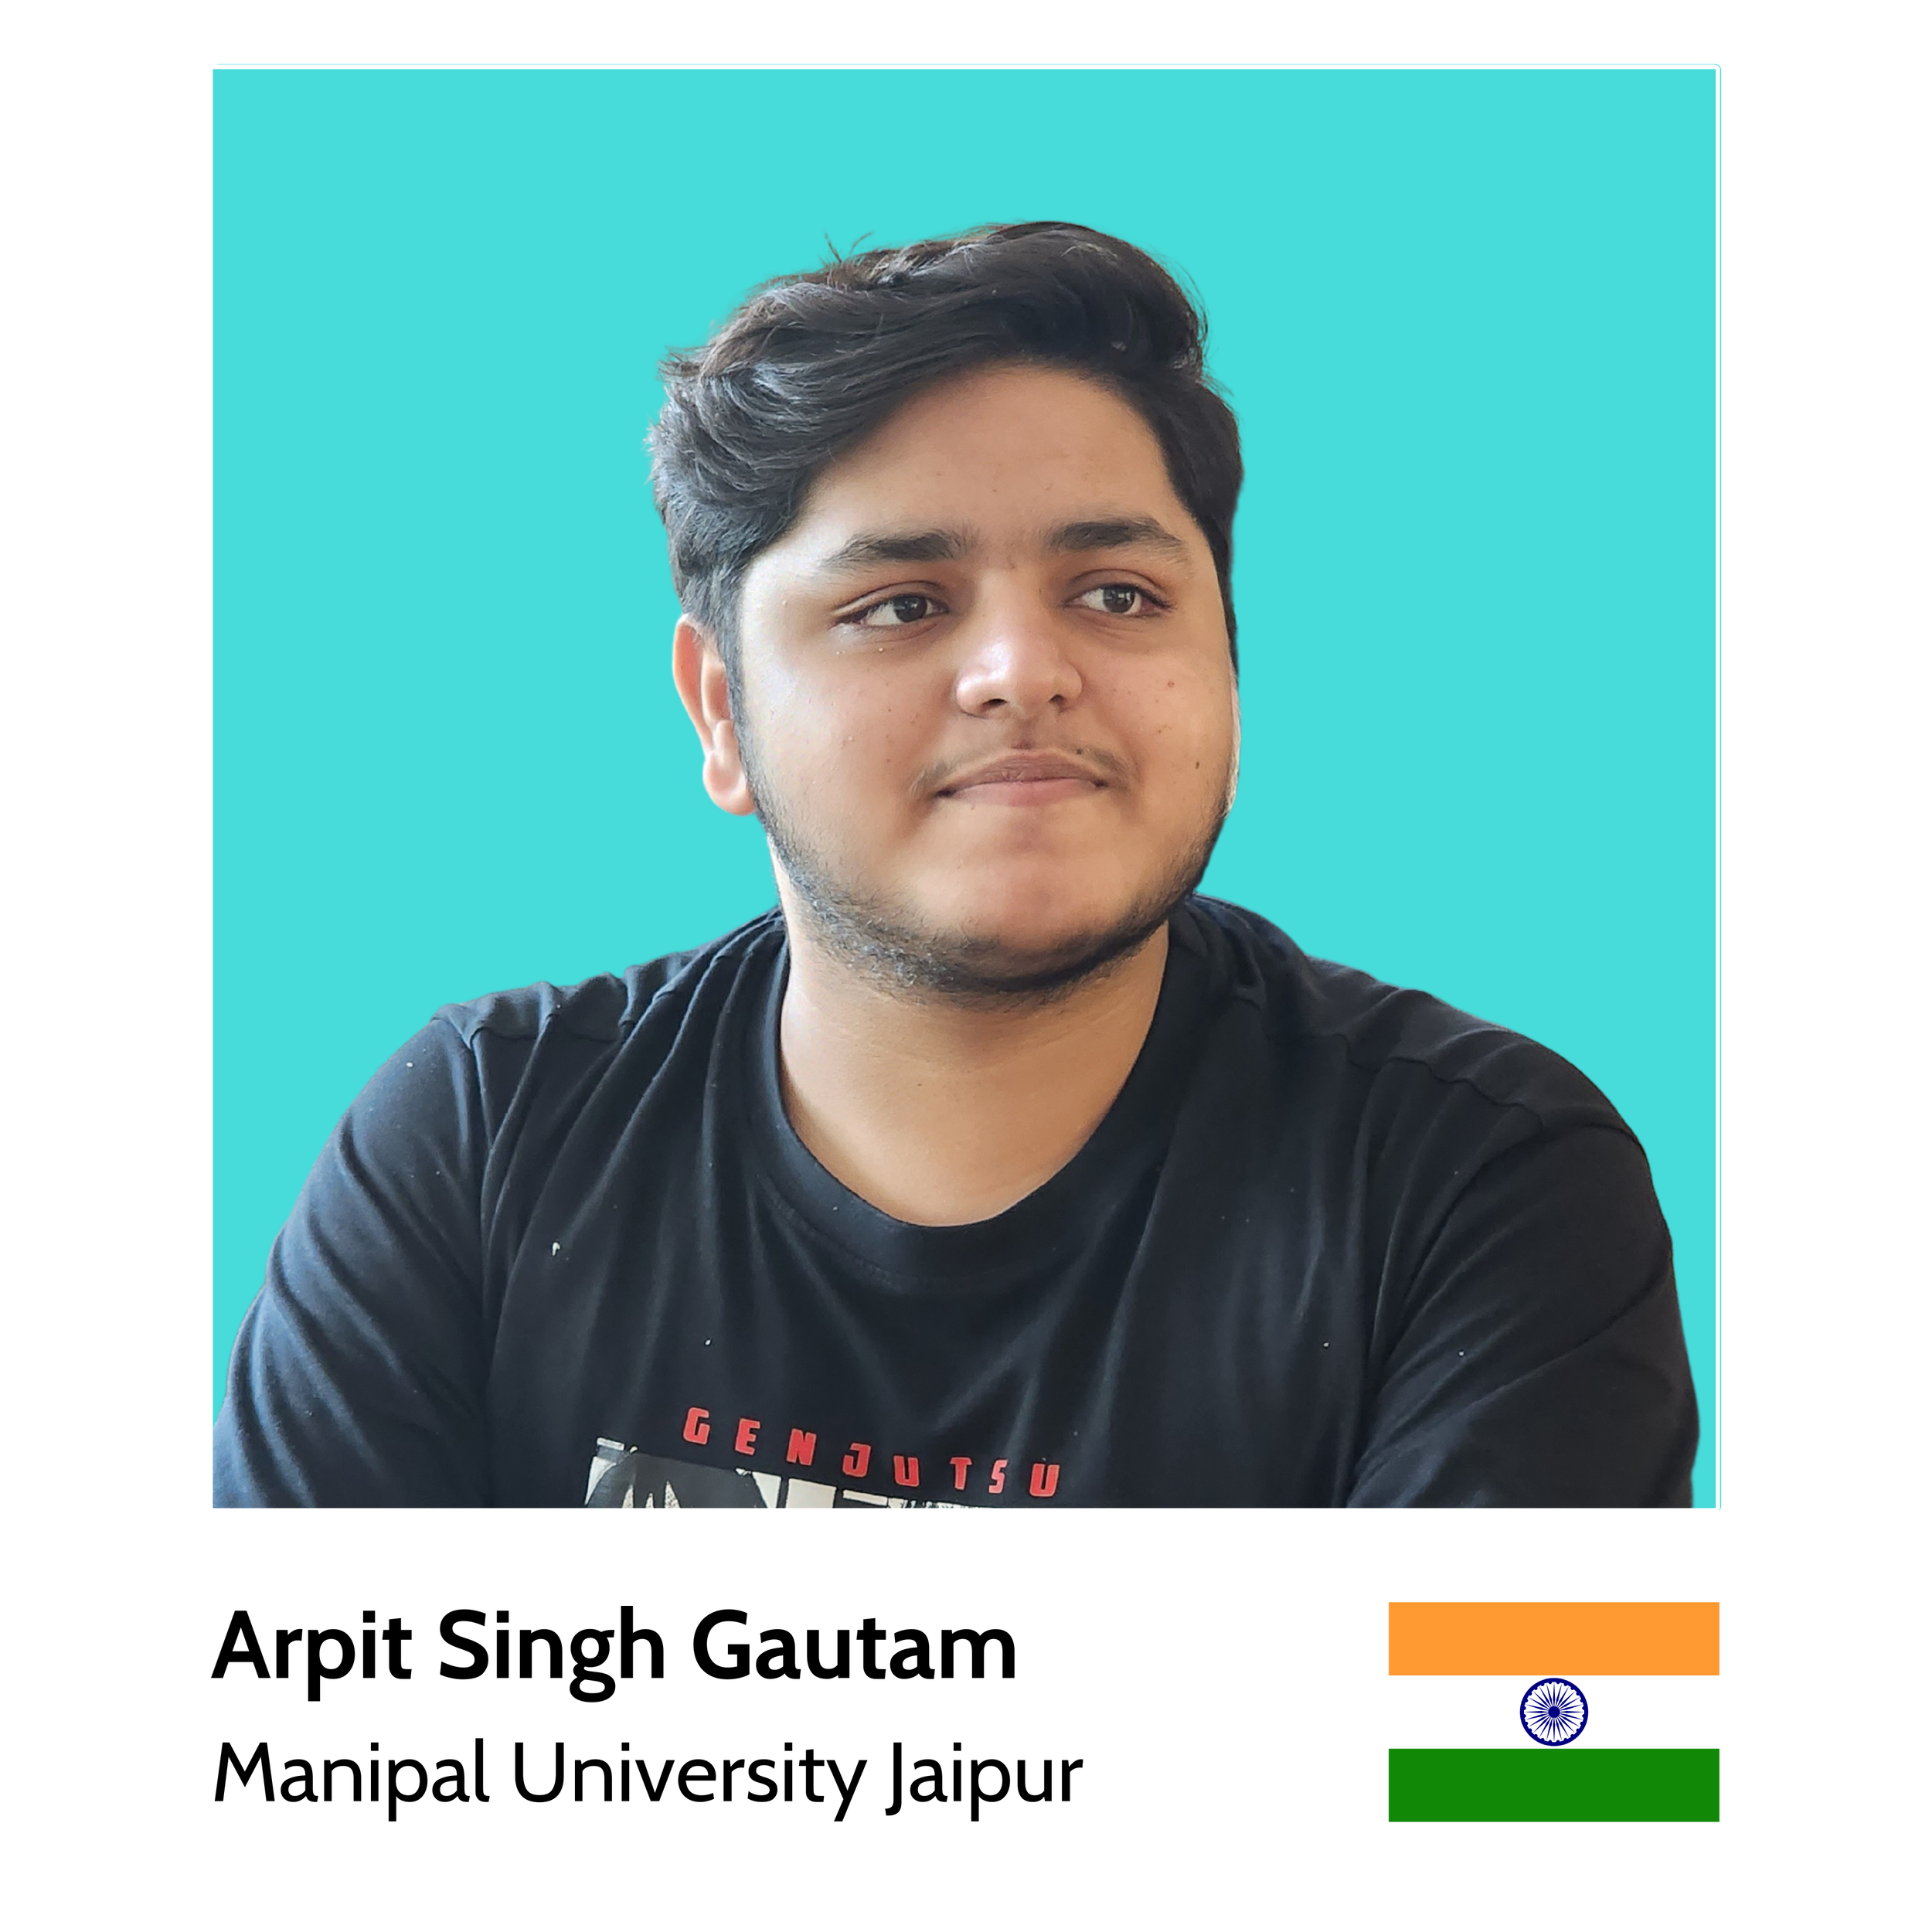 Your_Big_Year_ibm_zsystems_ambassador_Arpit_Singh_Gautam_Manipal_University_Jaipur.png